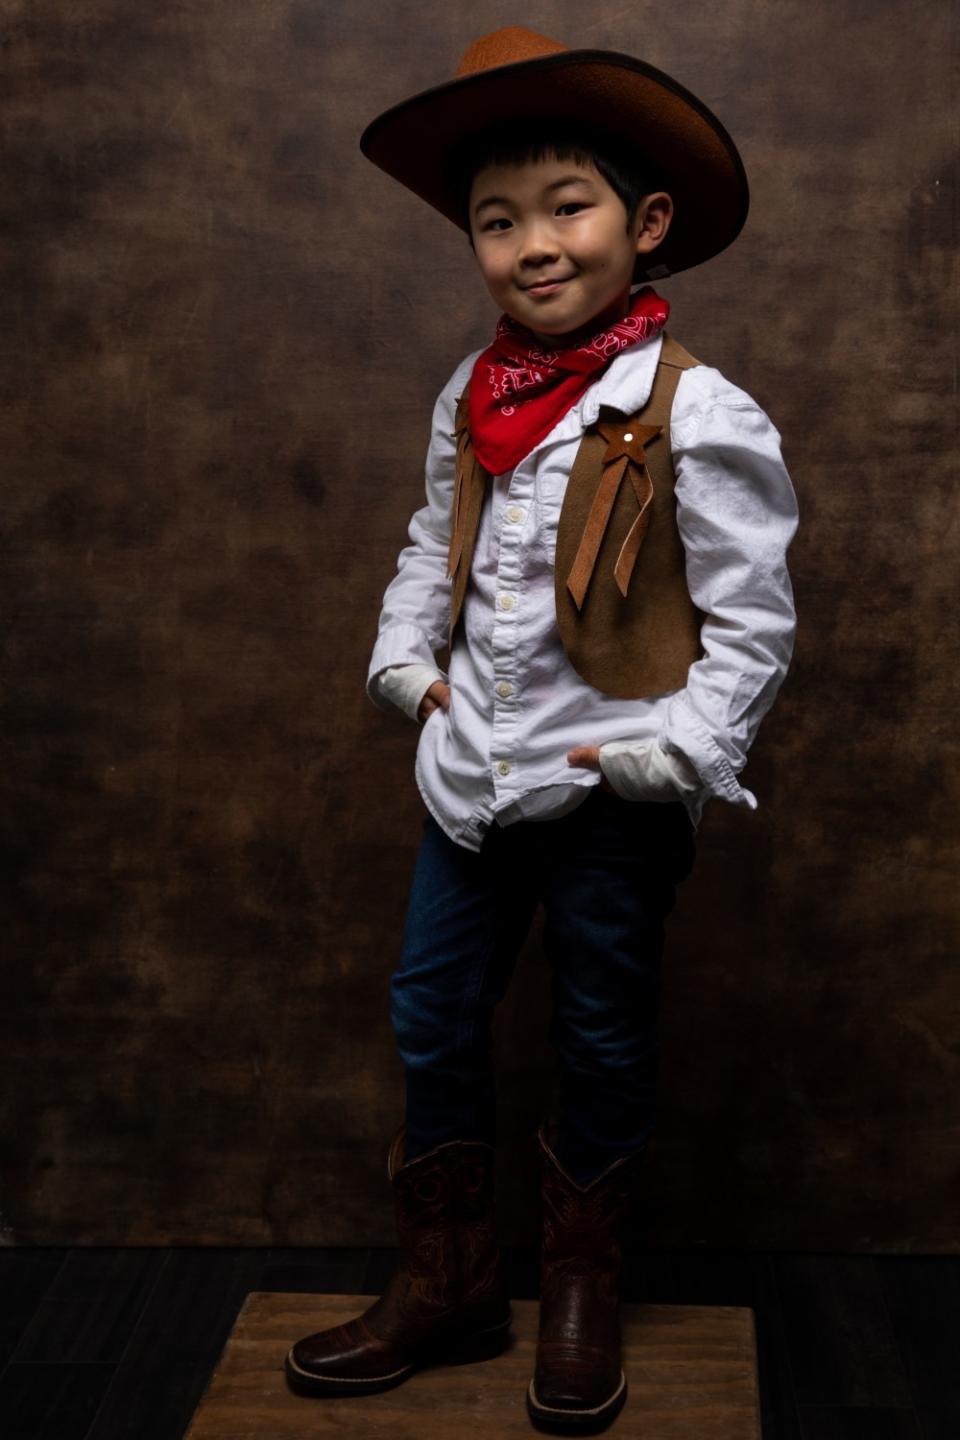 Alan Kim at Sundance in 2020, dressed in cowboy gear.